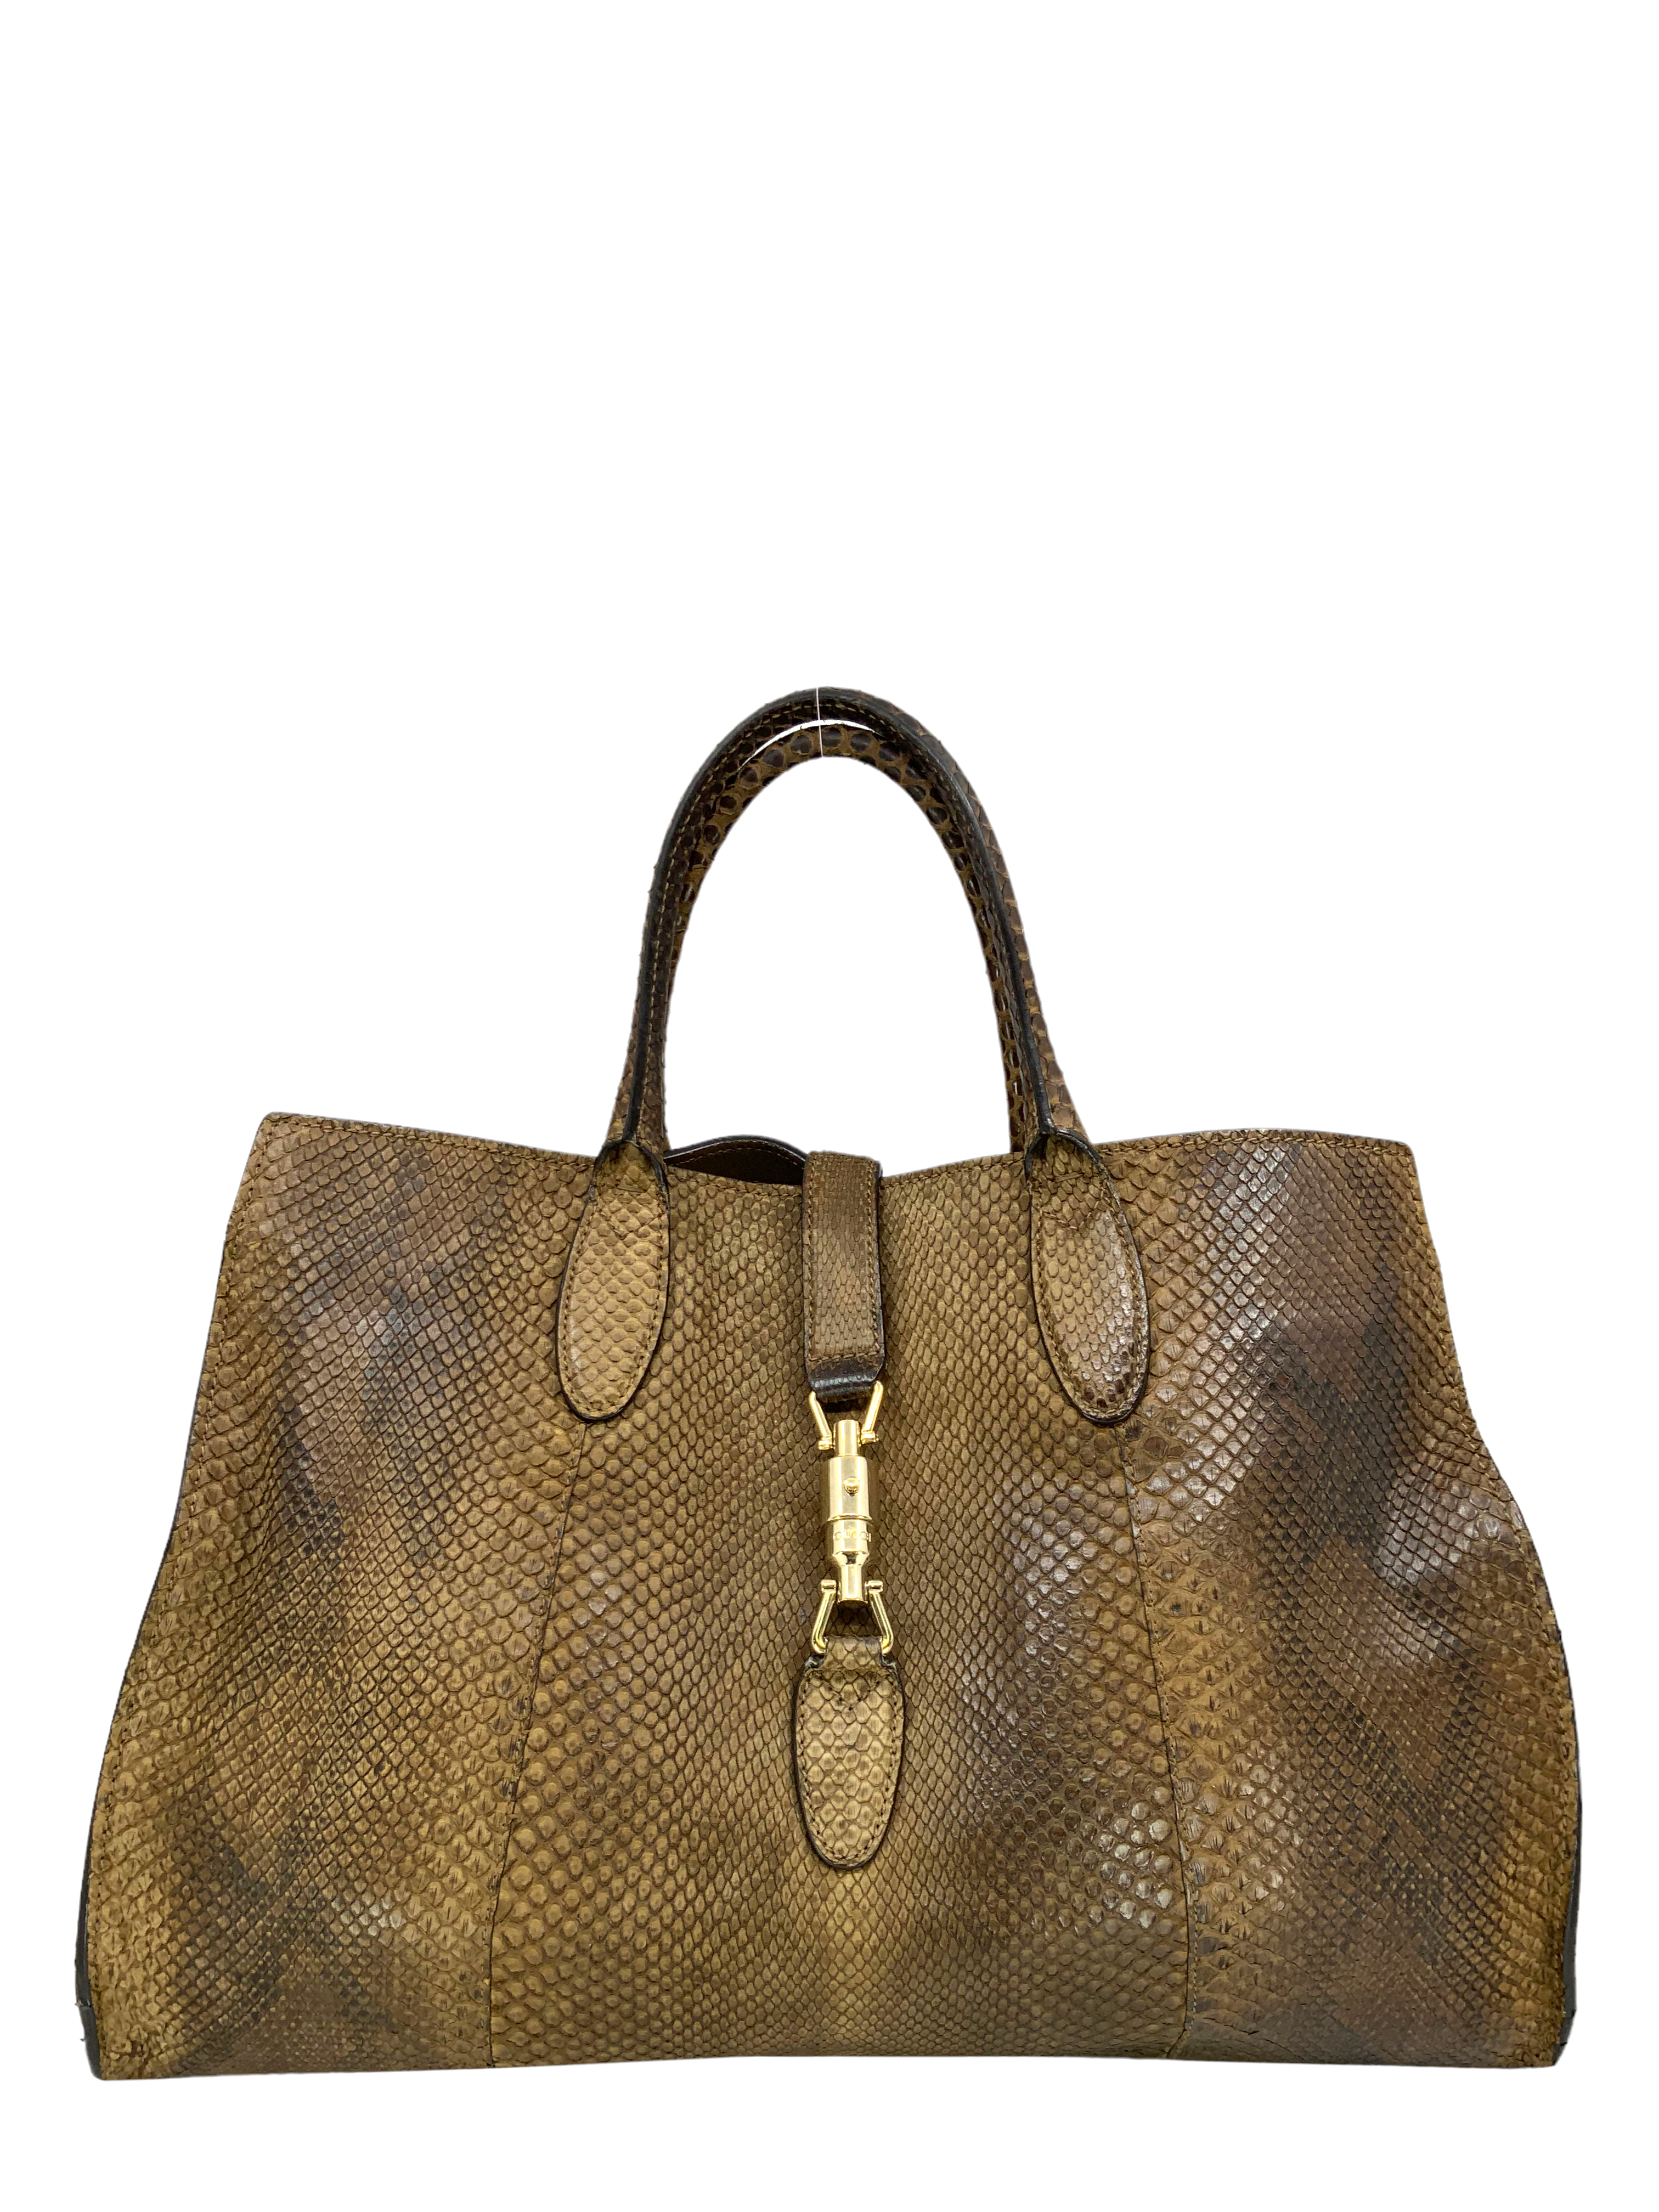 Python Bag Multicolor Python Leather Bag Snakeskin Bag 